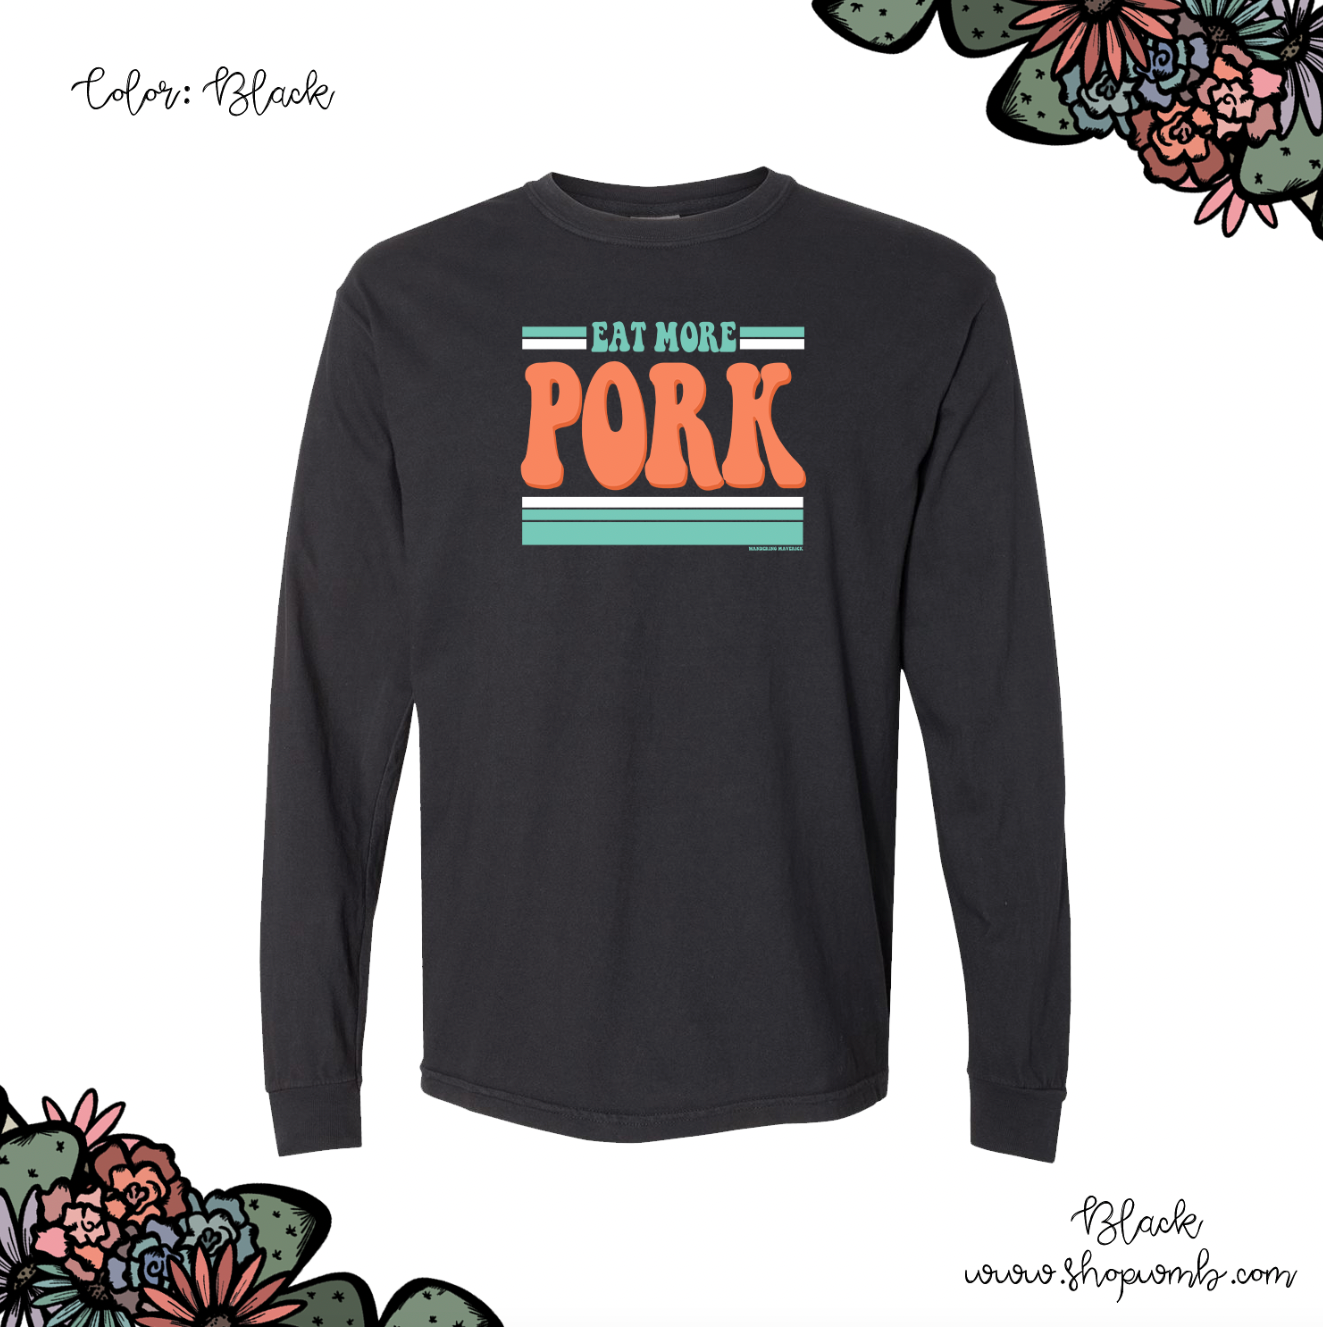 Eat More Pork LONG SLEEVE T-Shirt (S-3XL) - Multiple Colors!